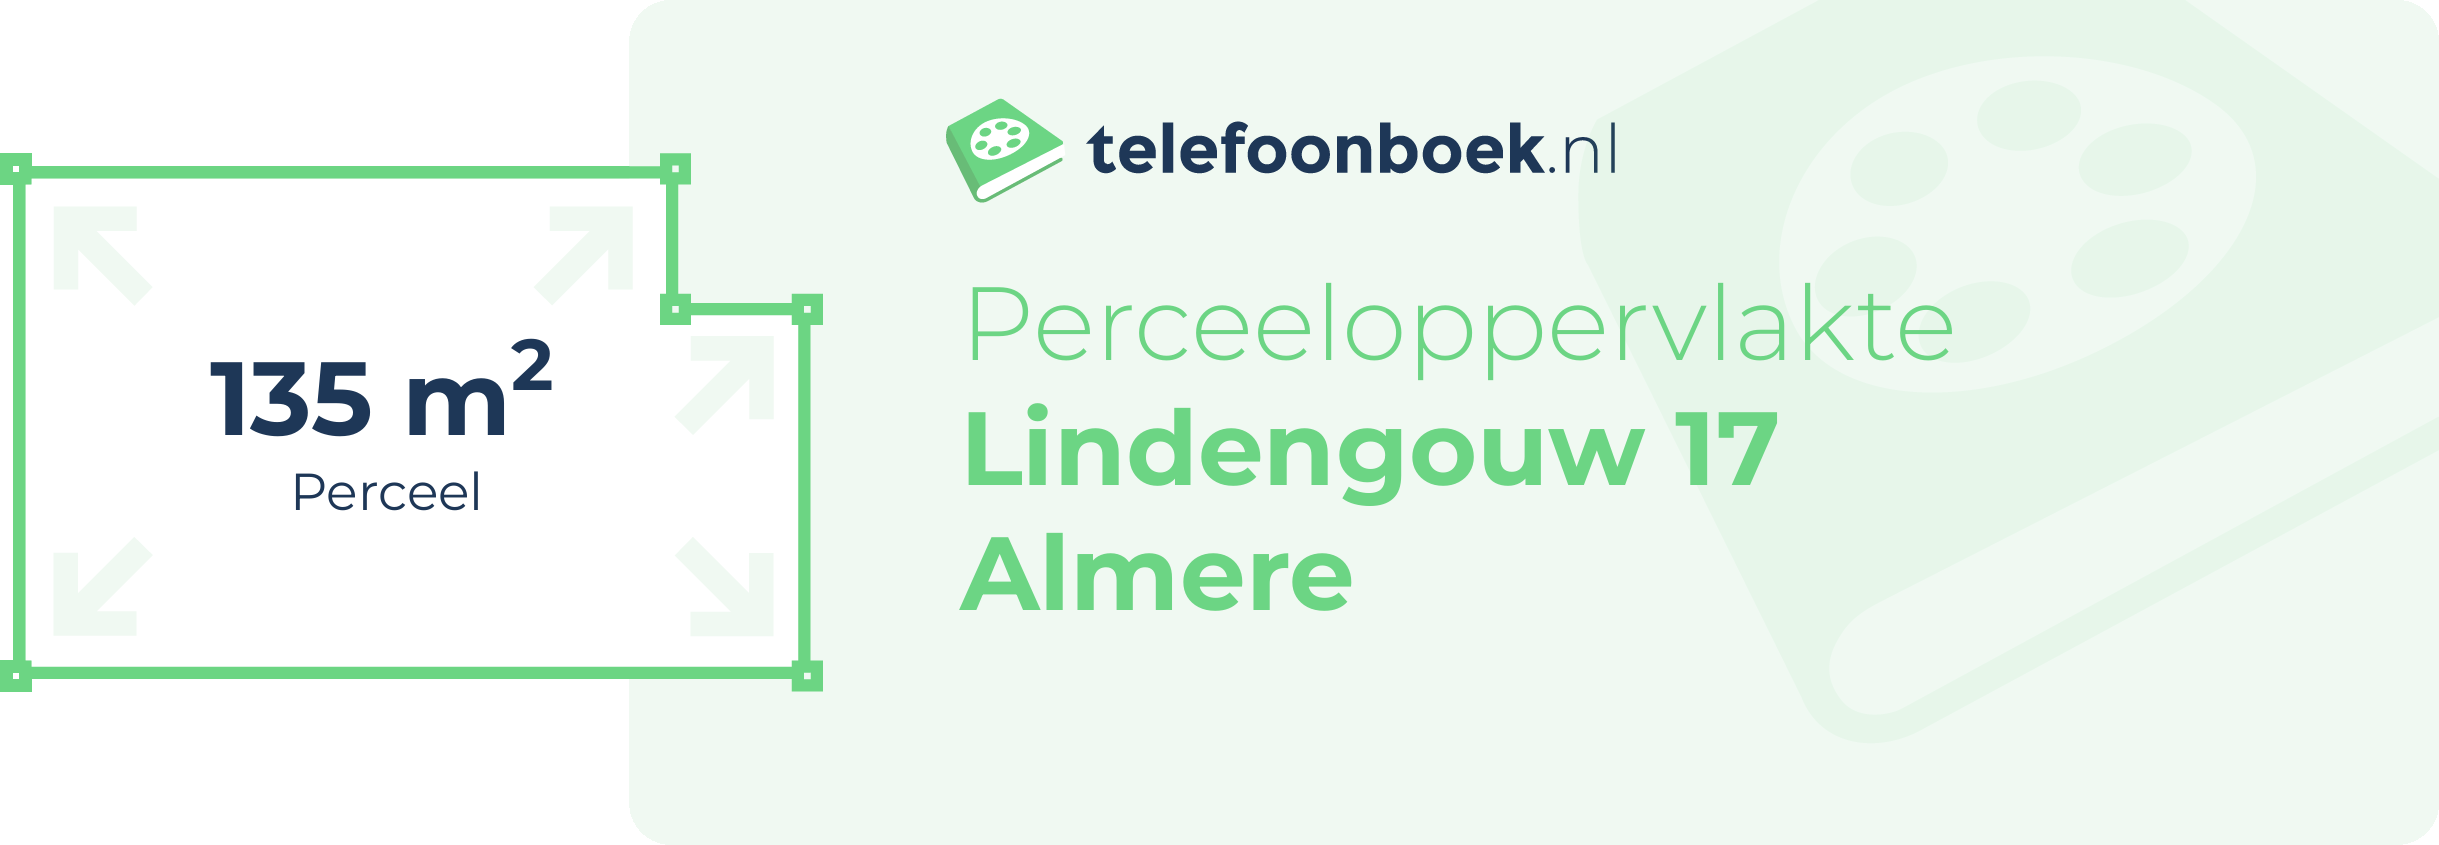 Perceeloppervlakte Lindengouw 17 Almere